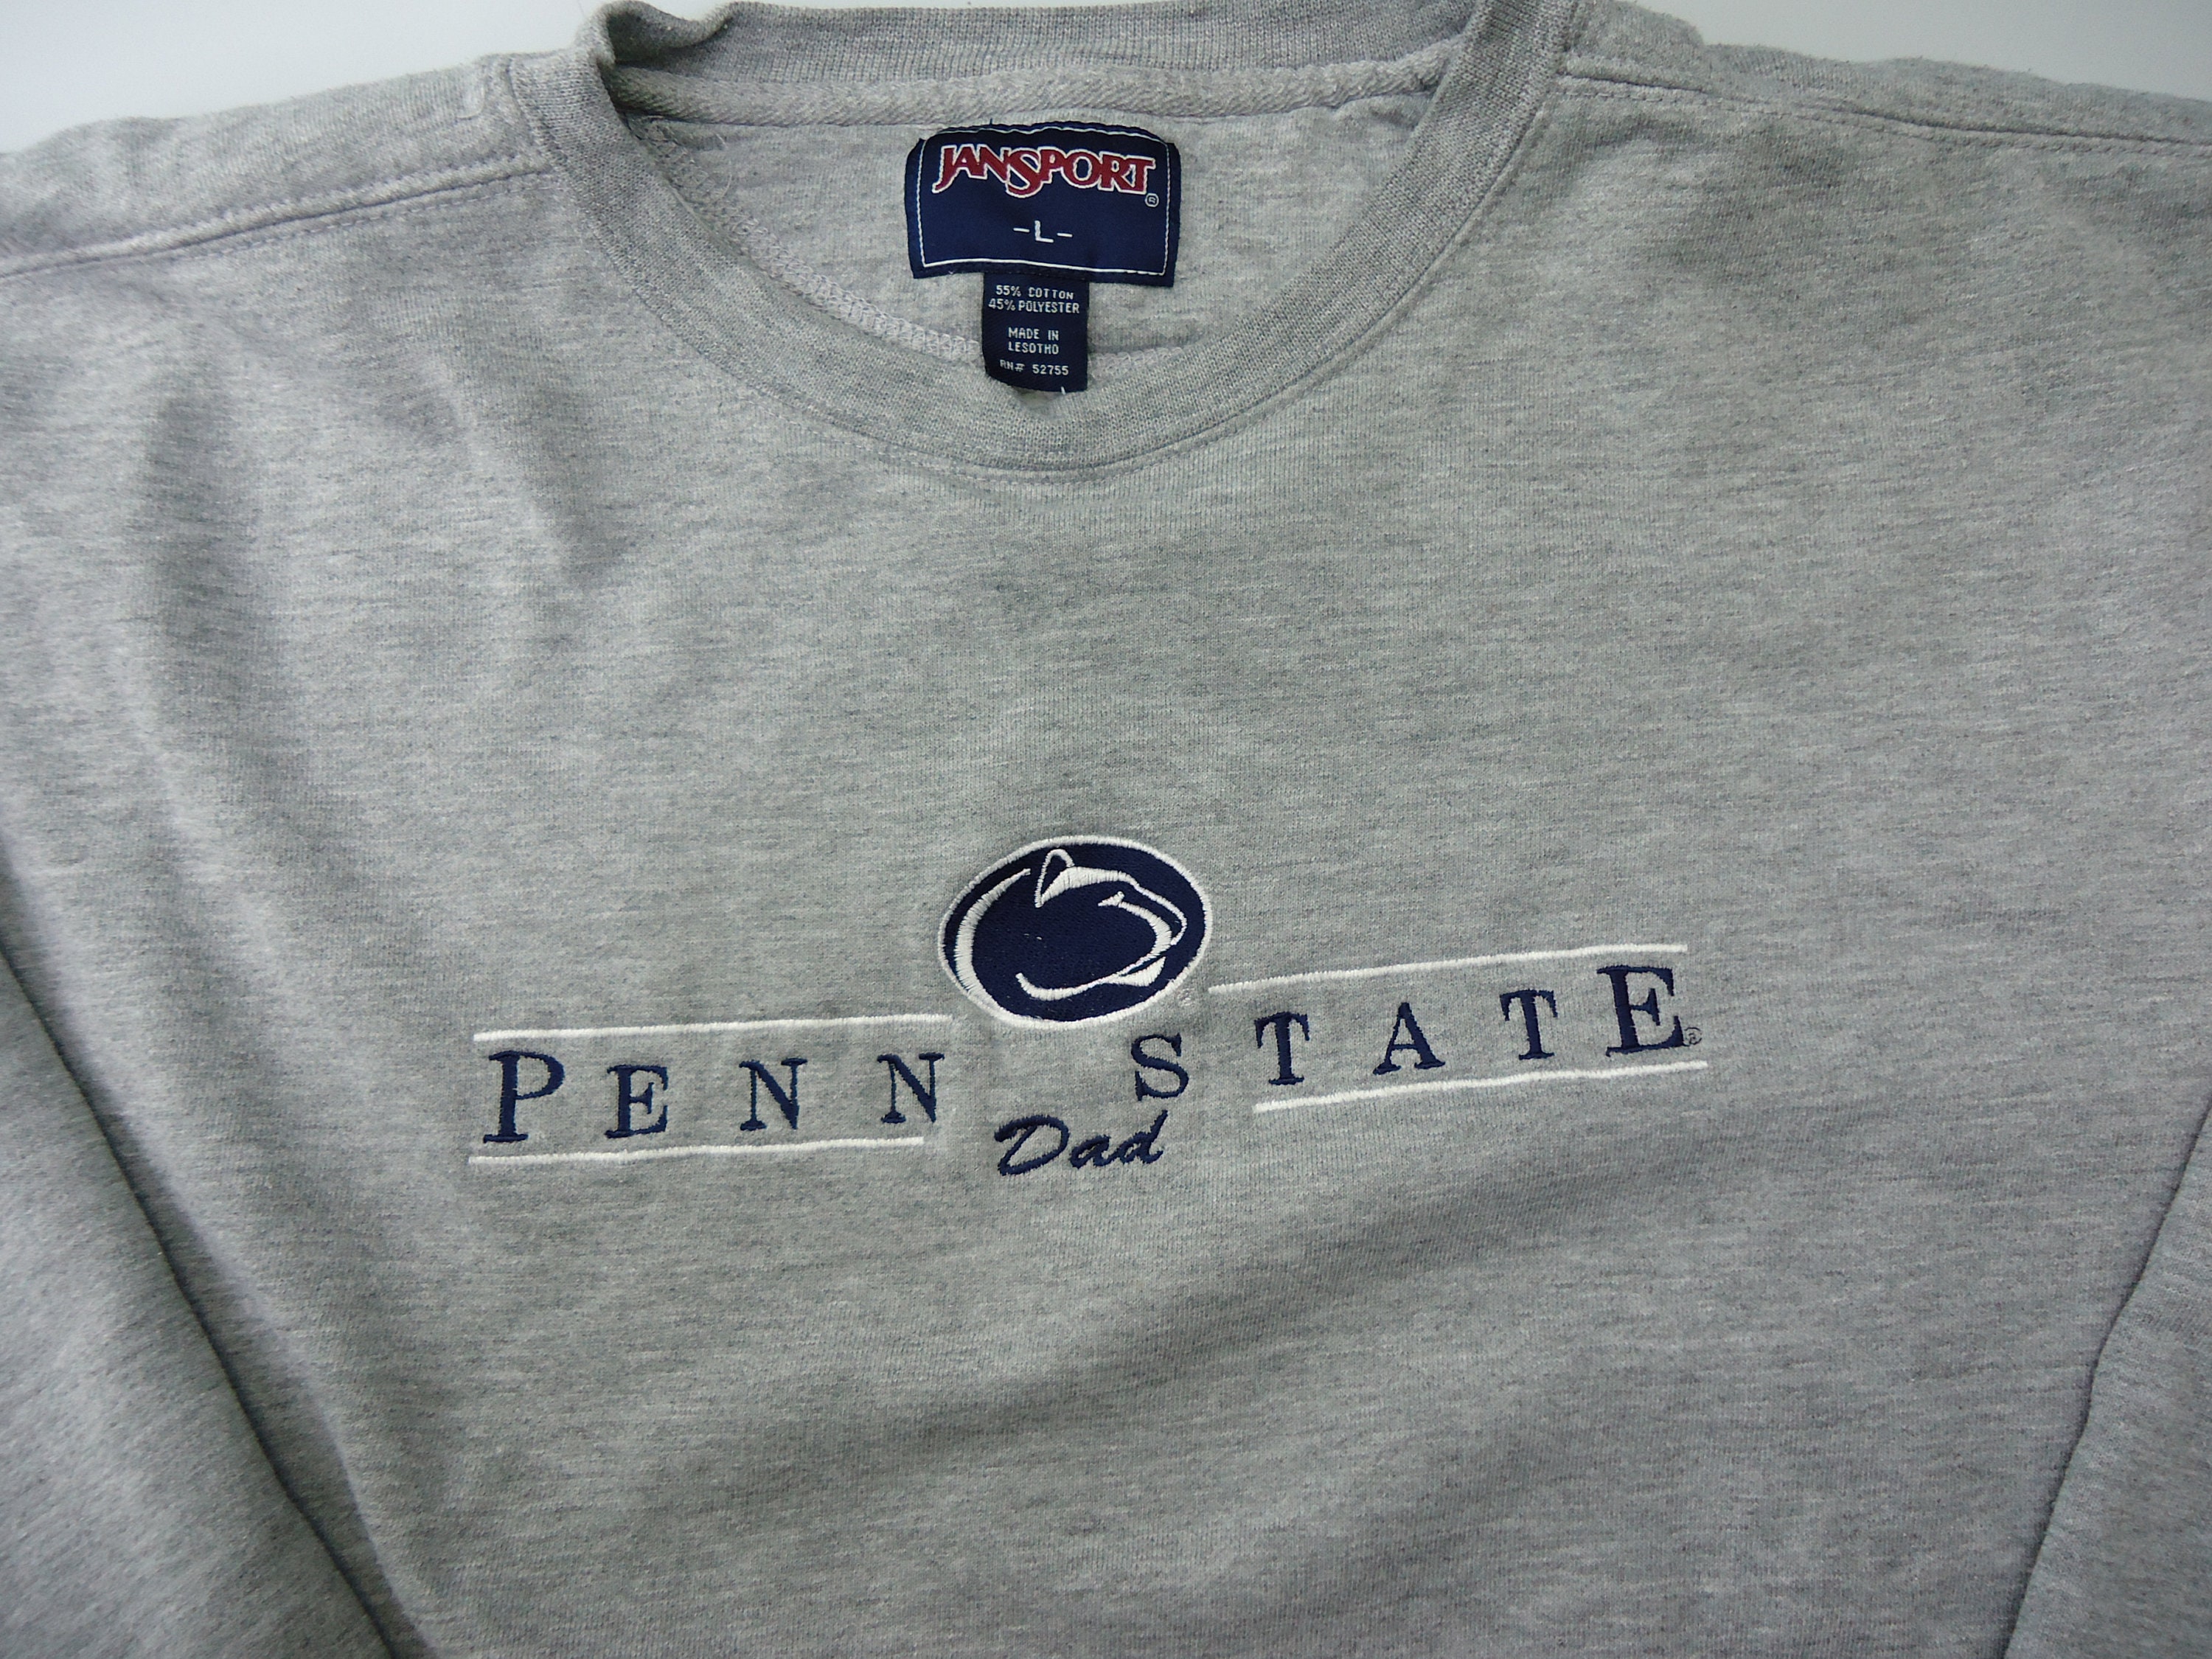 Penn State Dad Vintage sweatshirt Nittany Lions | Etsy